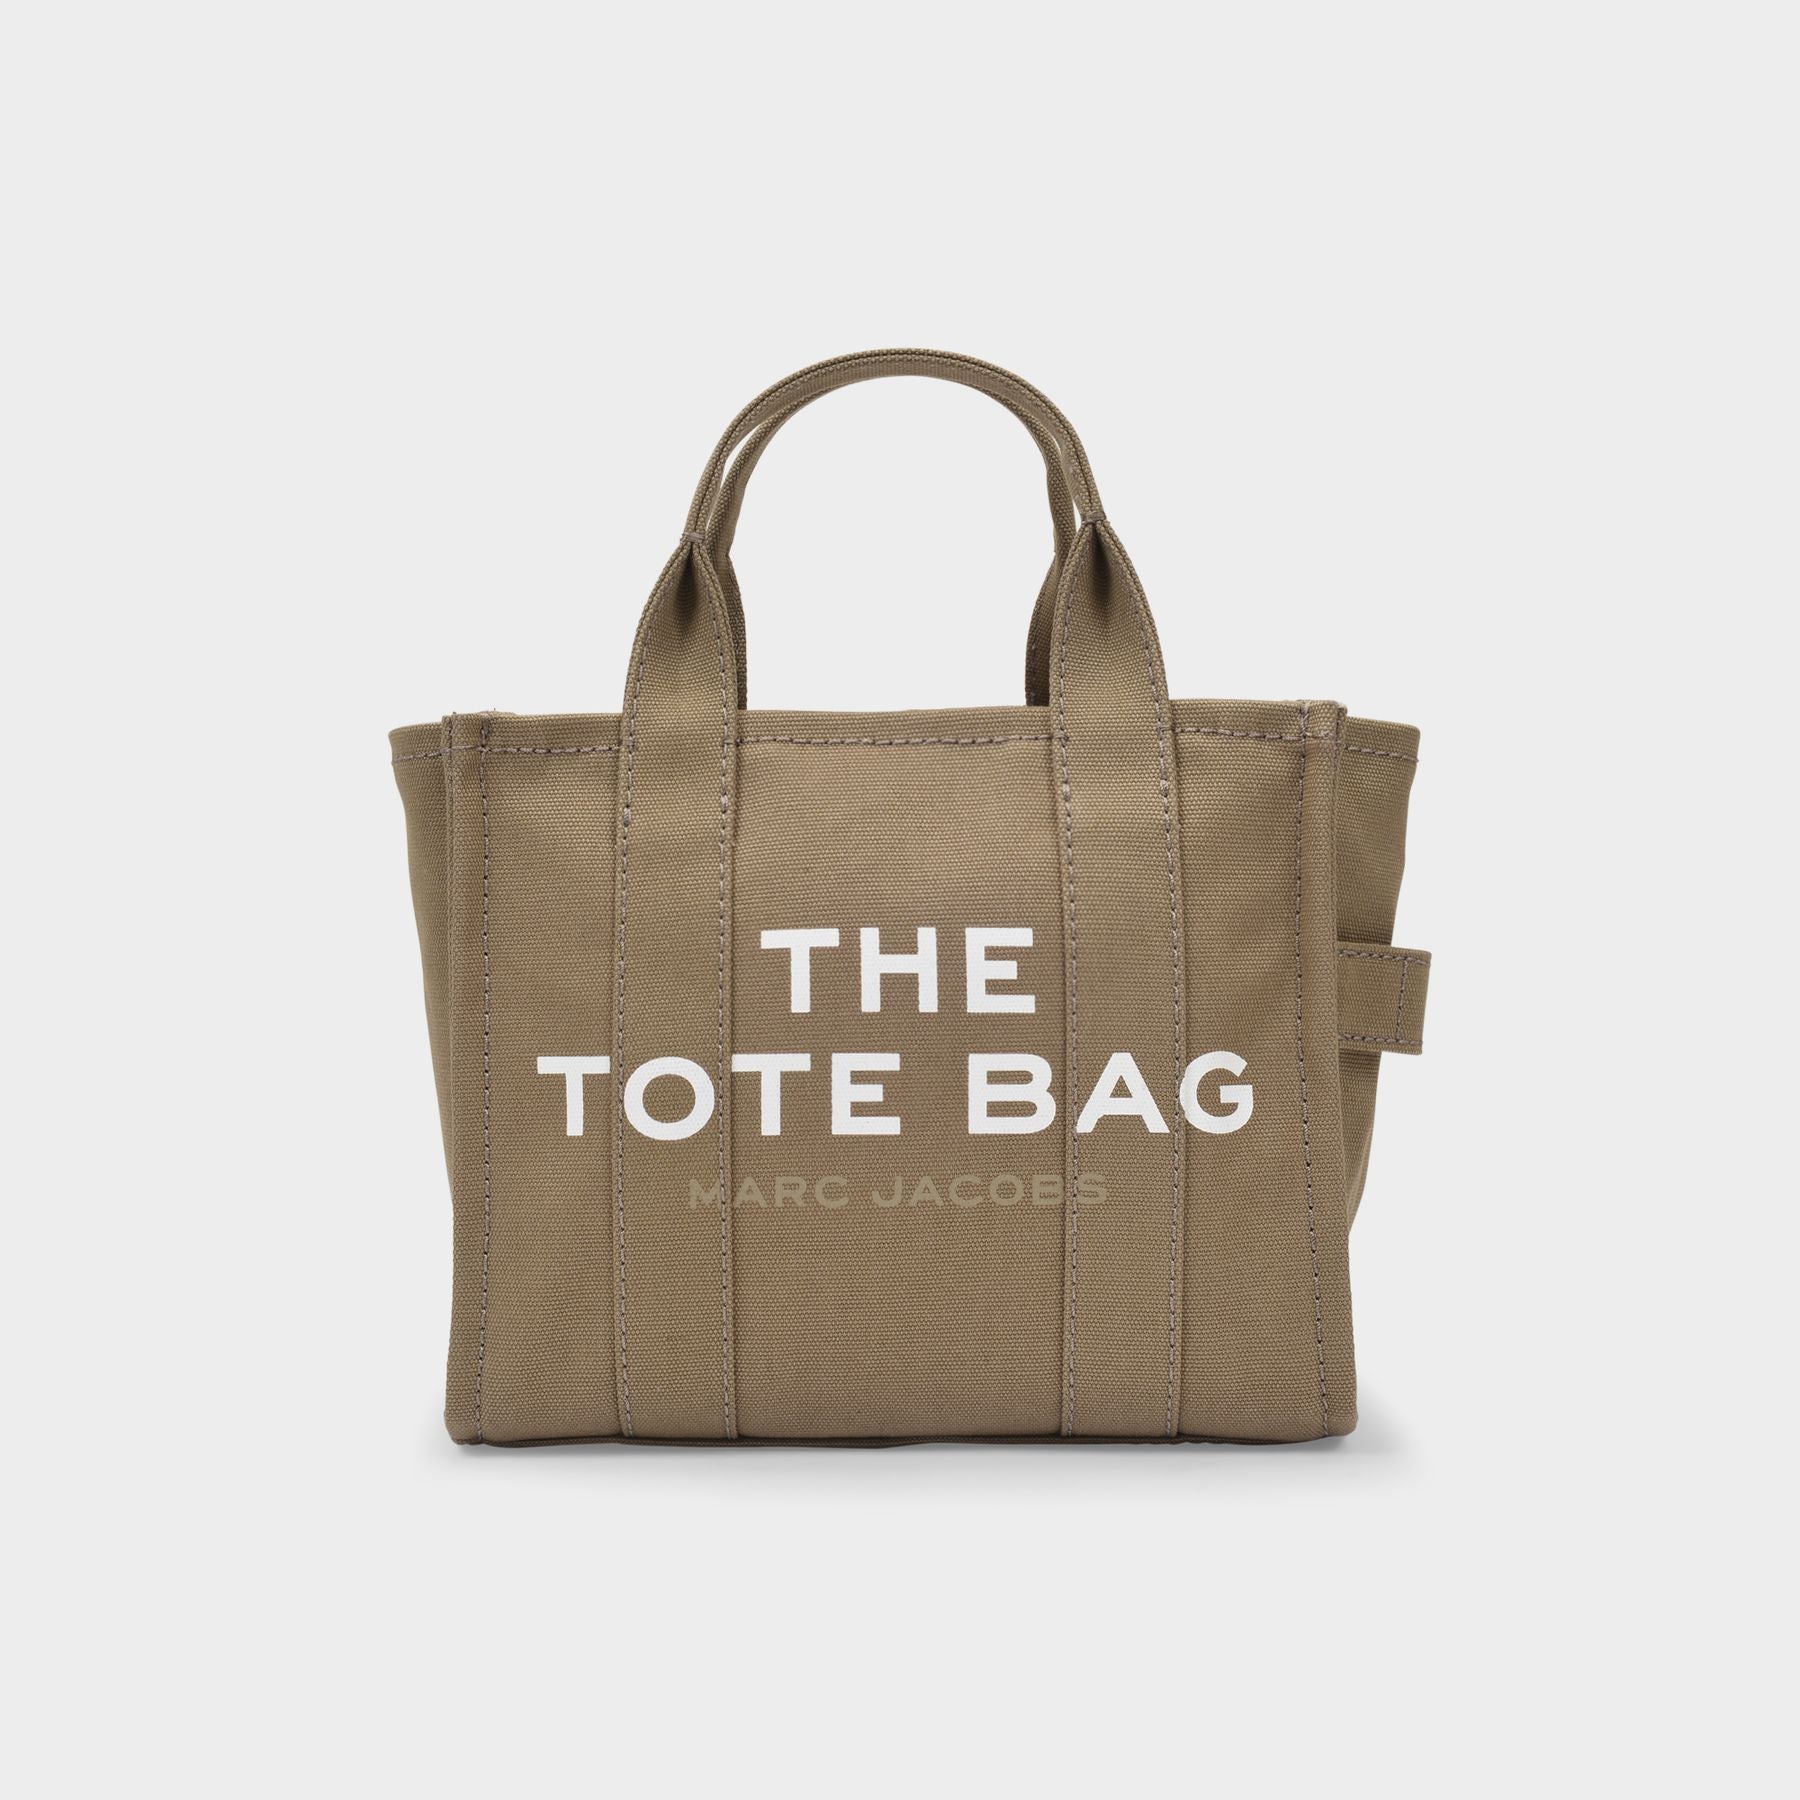 The Mini Tote Bag - Marc Jacobs - Coton - Slate Green